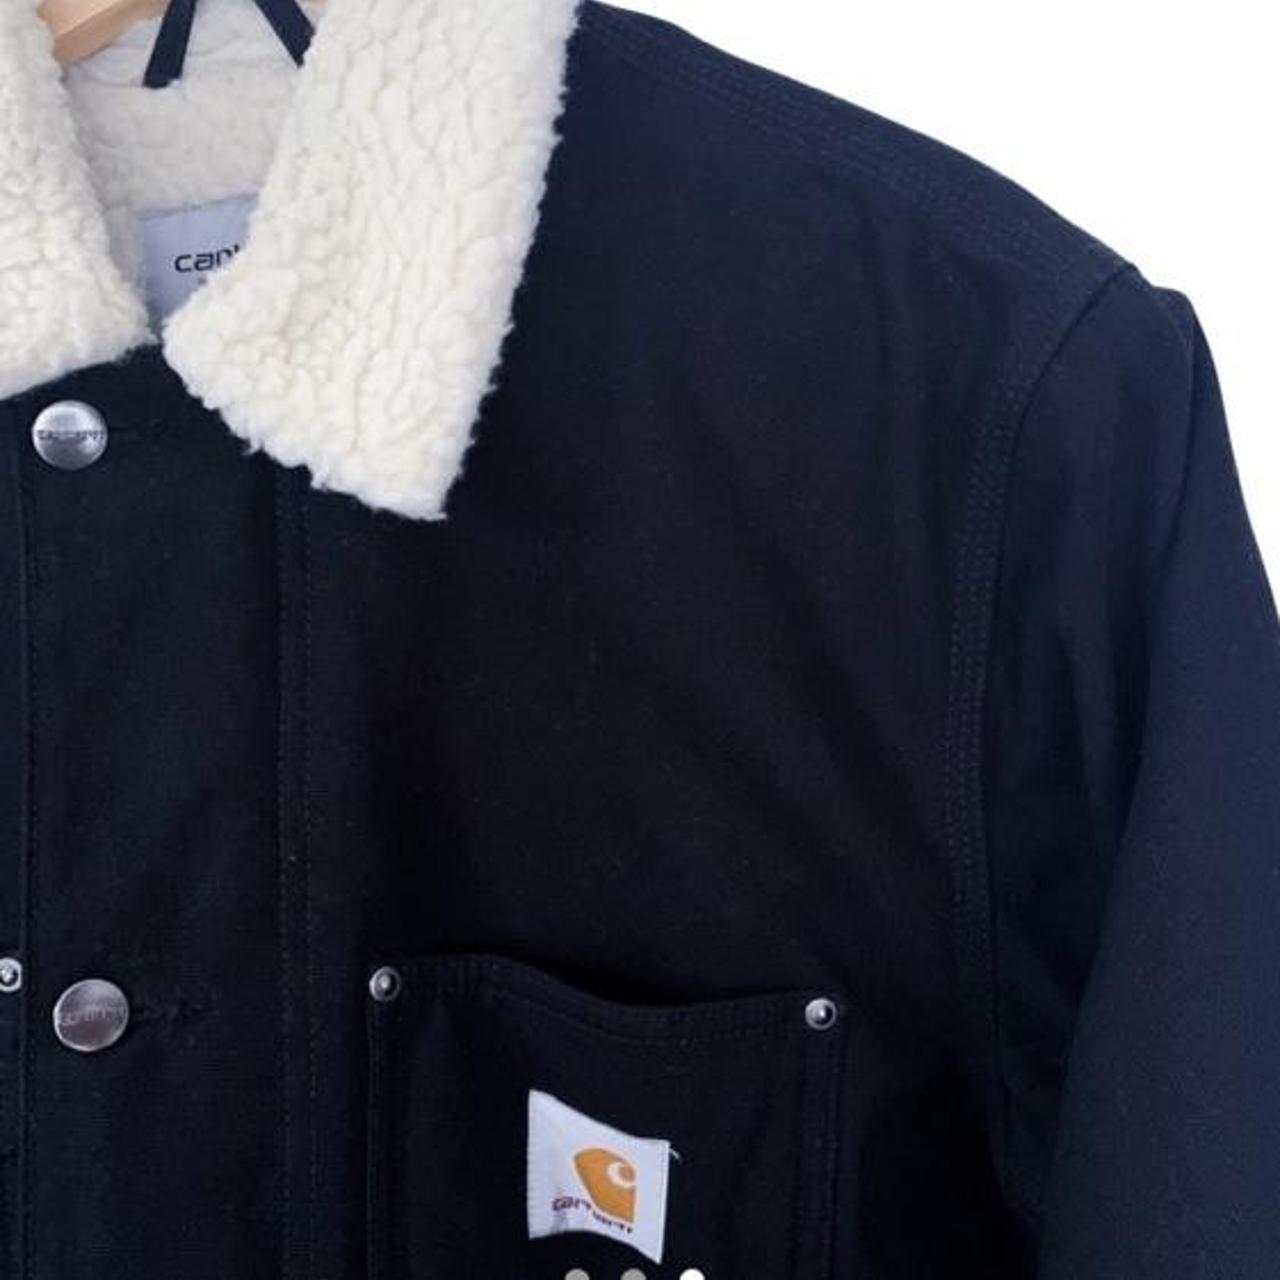 Carhartt WIP - Fairmount Rigid Black - Jacket